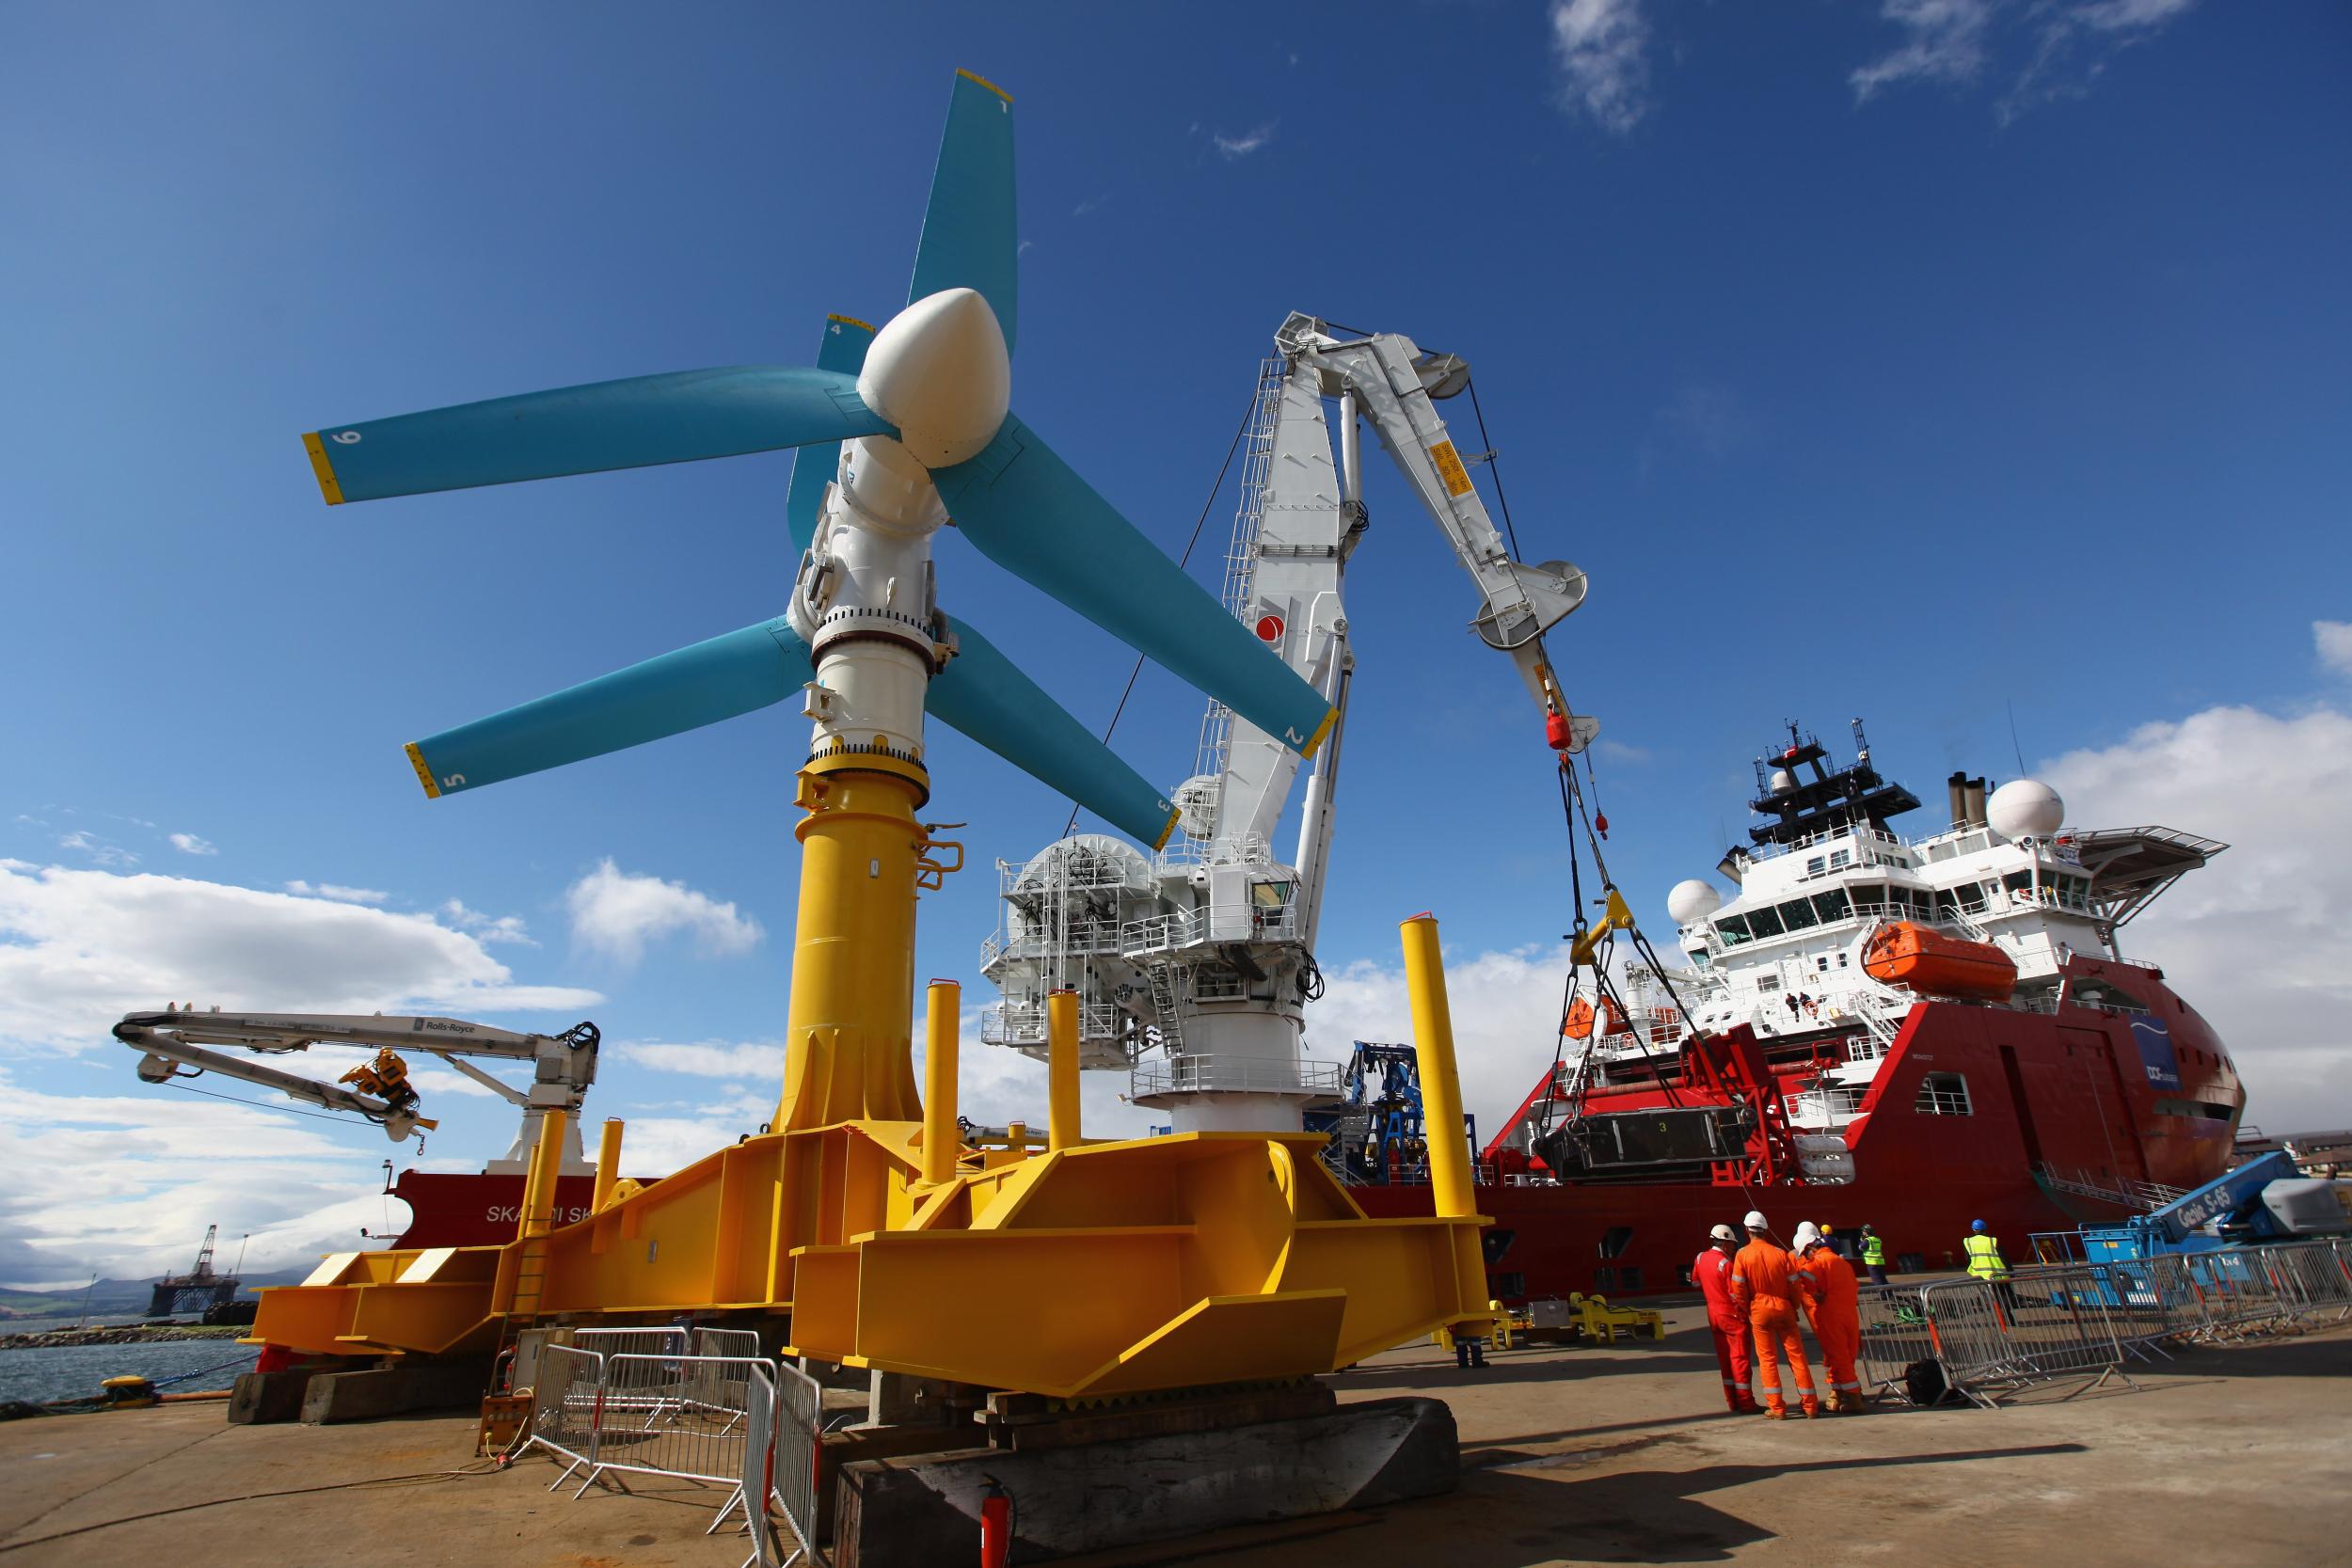 A tidal turbine designed by Atlantis is bringing power to Scotland